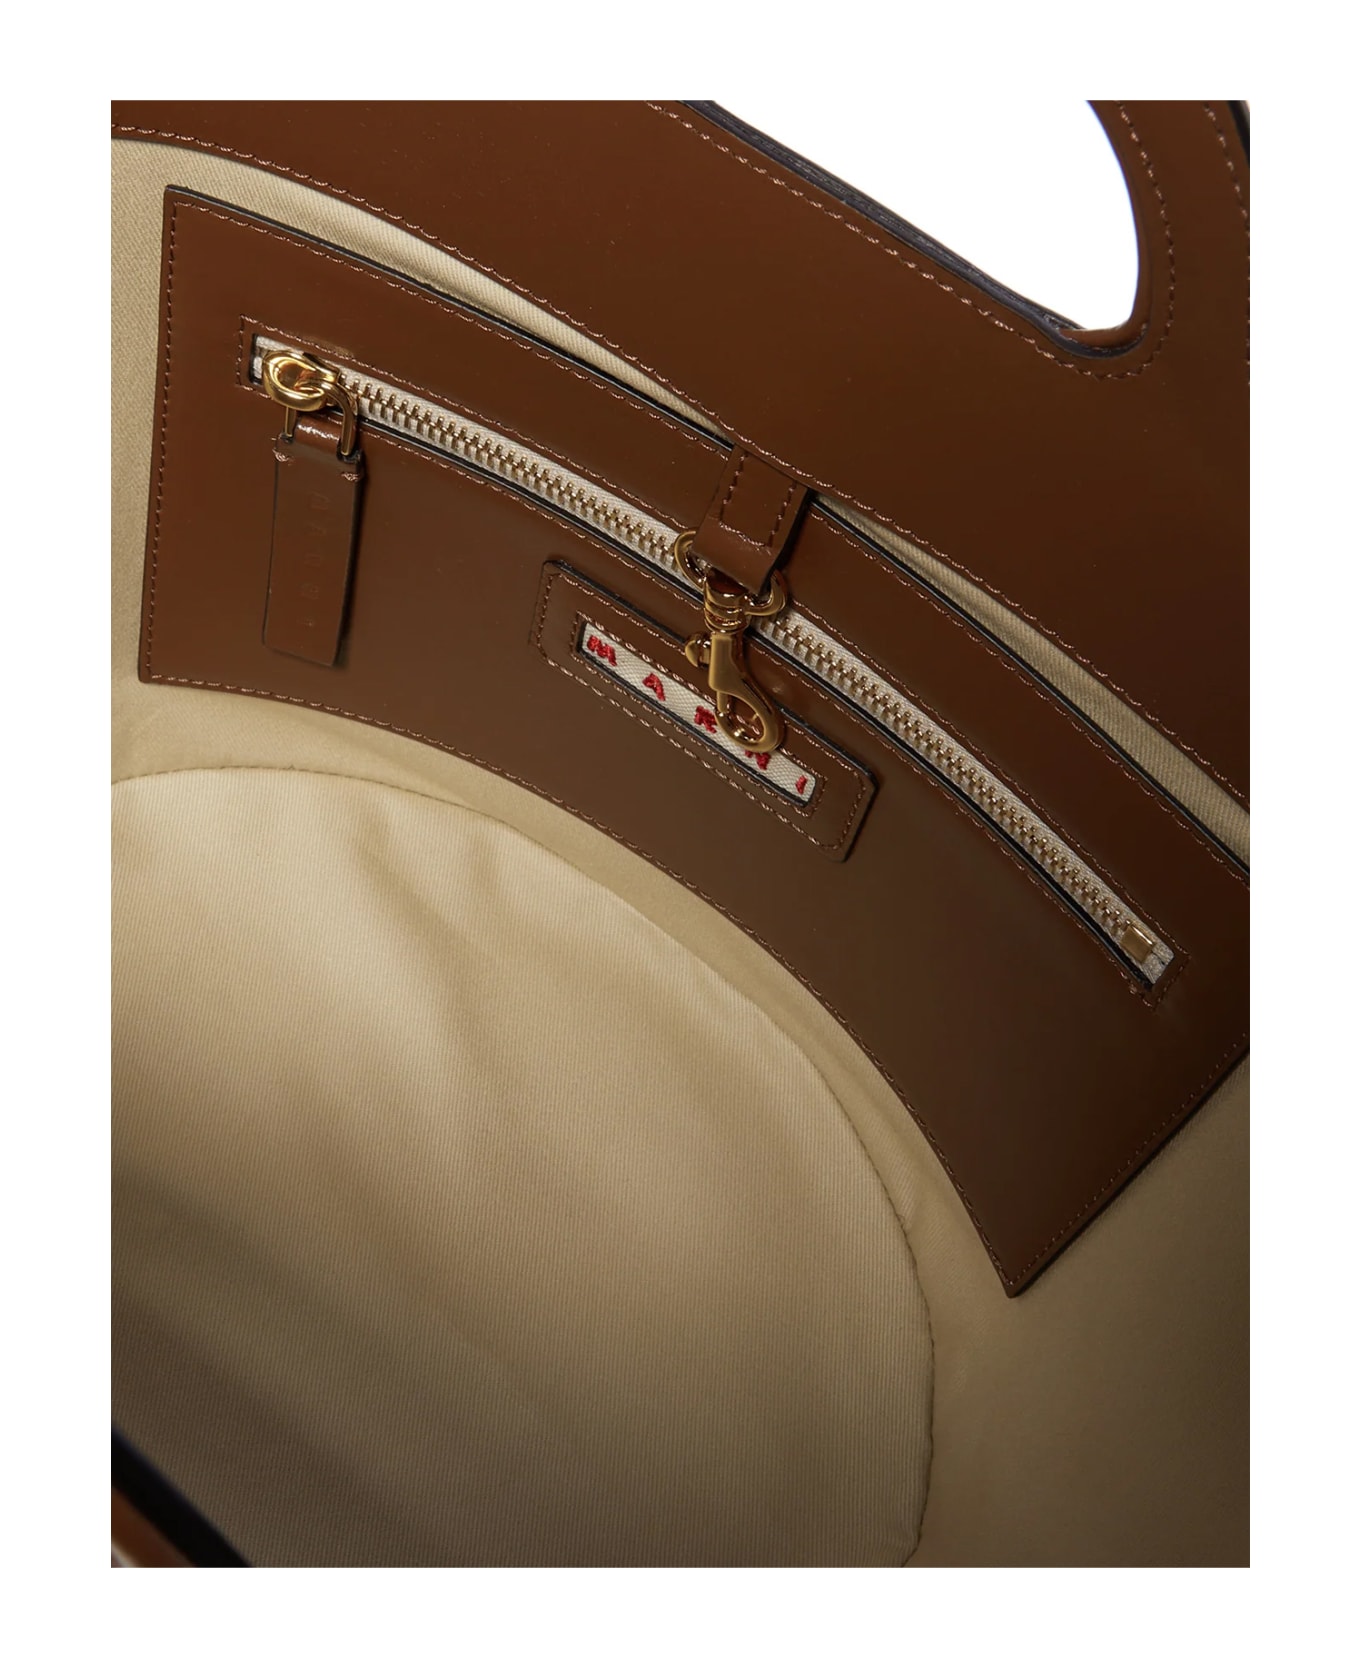 Marni Tropicalia Handbag In Brown Leather And Raffia Effect Fabric - Brown